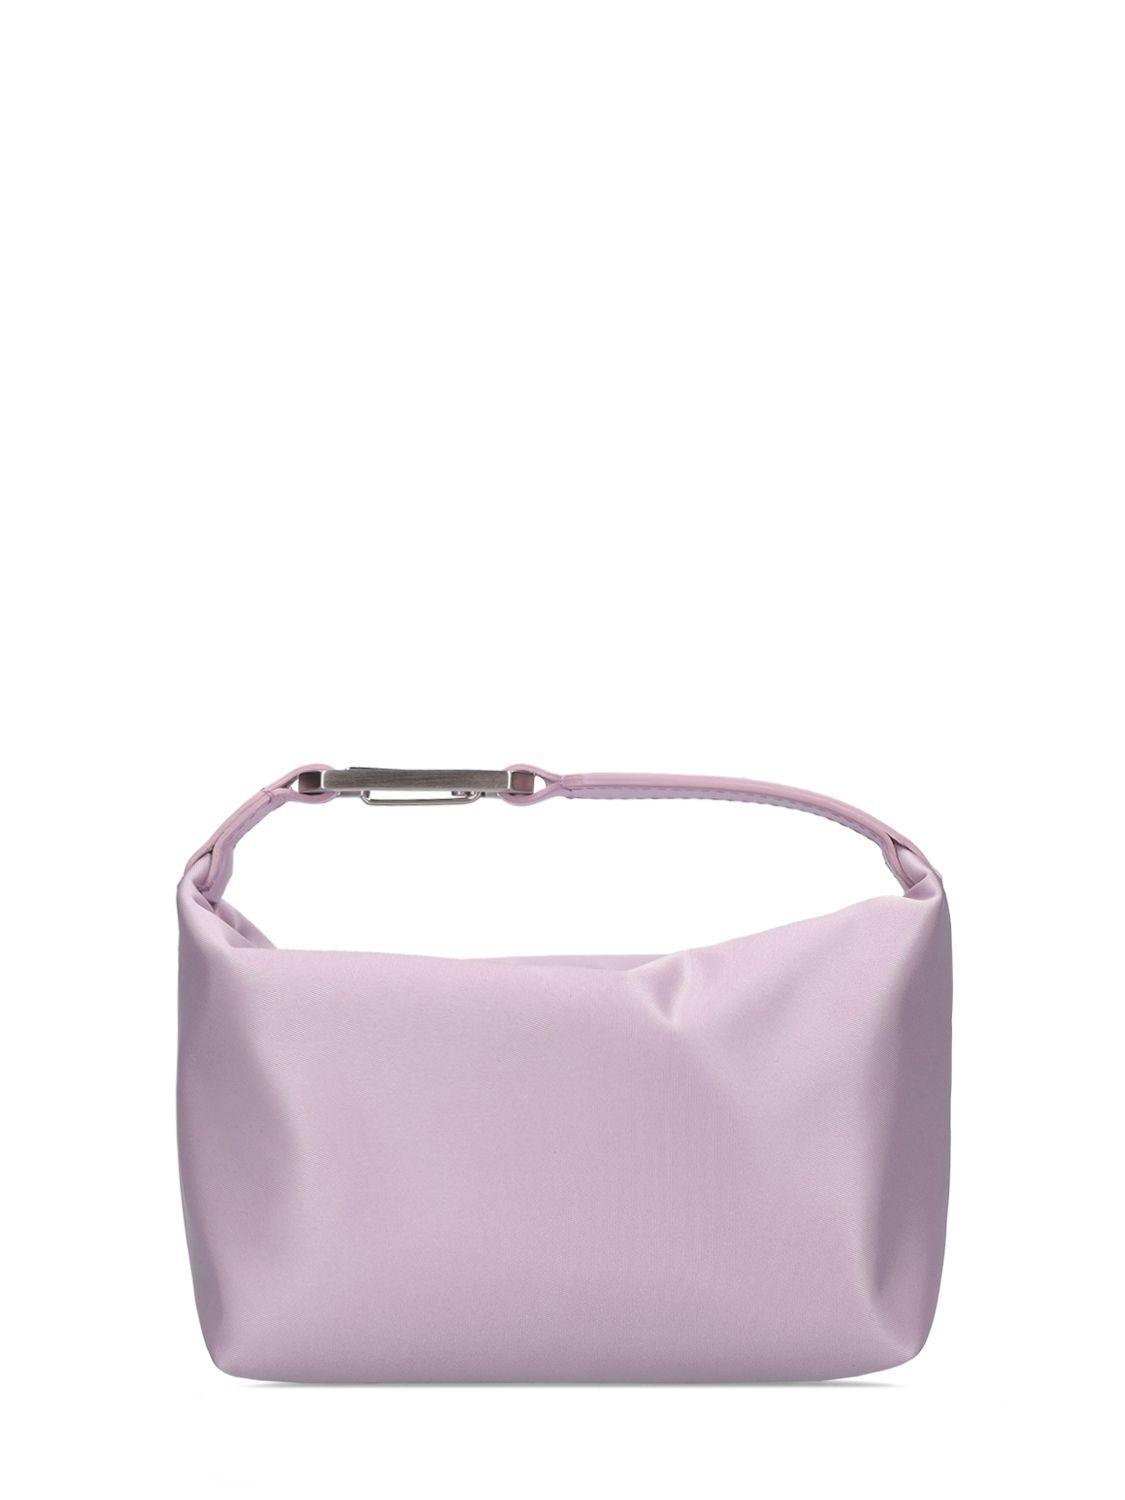 Era Moonbag Nylon Top Handle Bag in Purple | Lyst